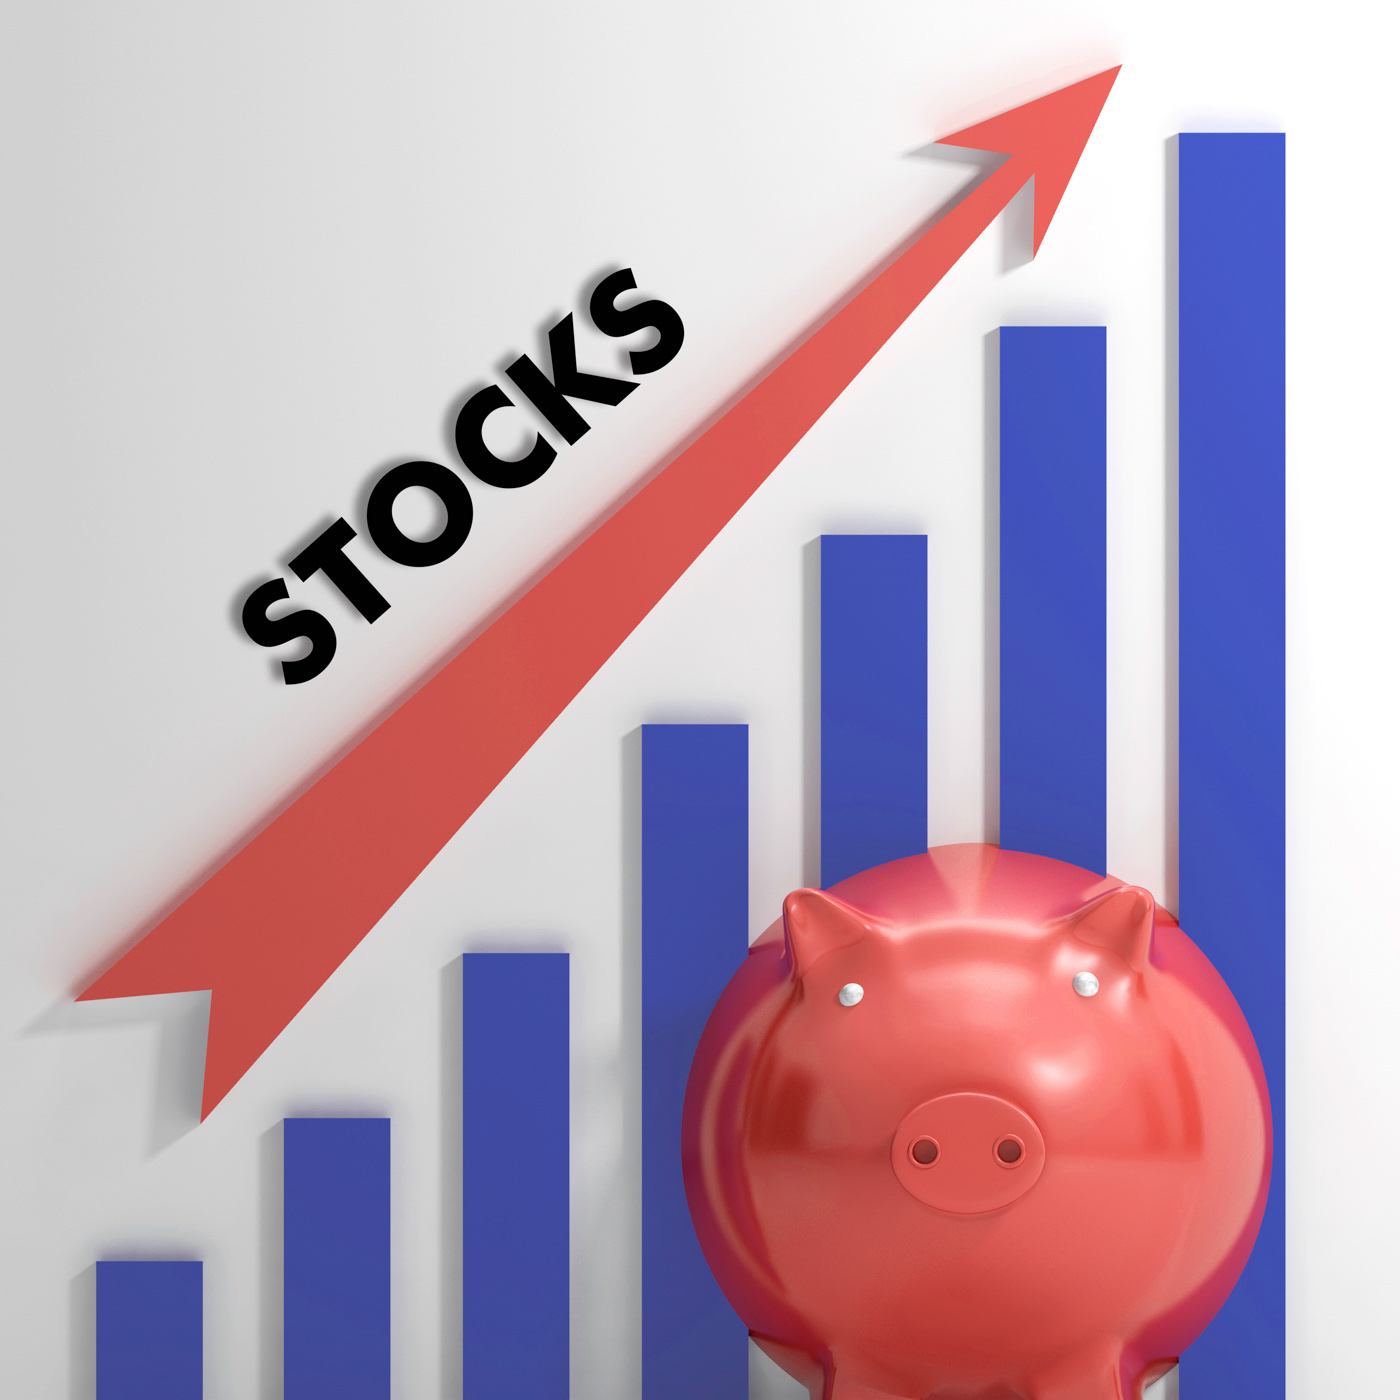 Raising Stocks Chart Shows Monetary Growth, Increase, Stocks, Stock, Savings, HQ Photo